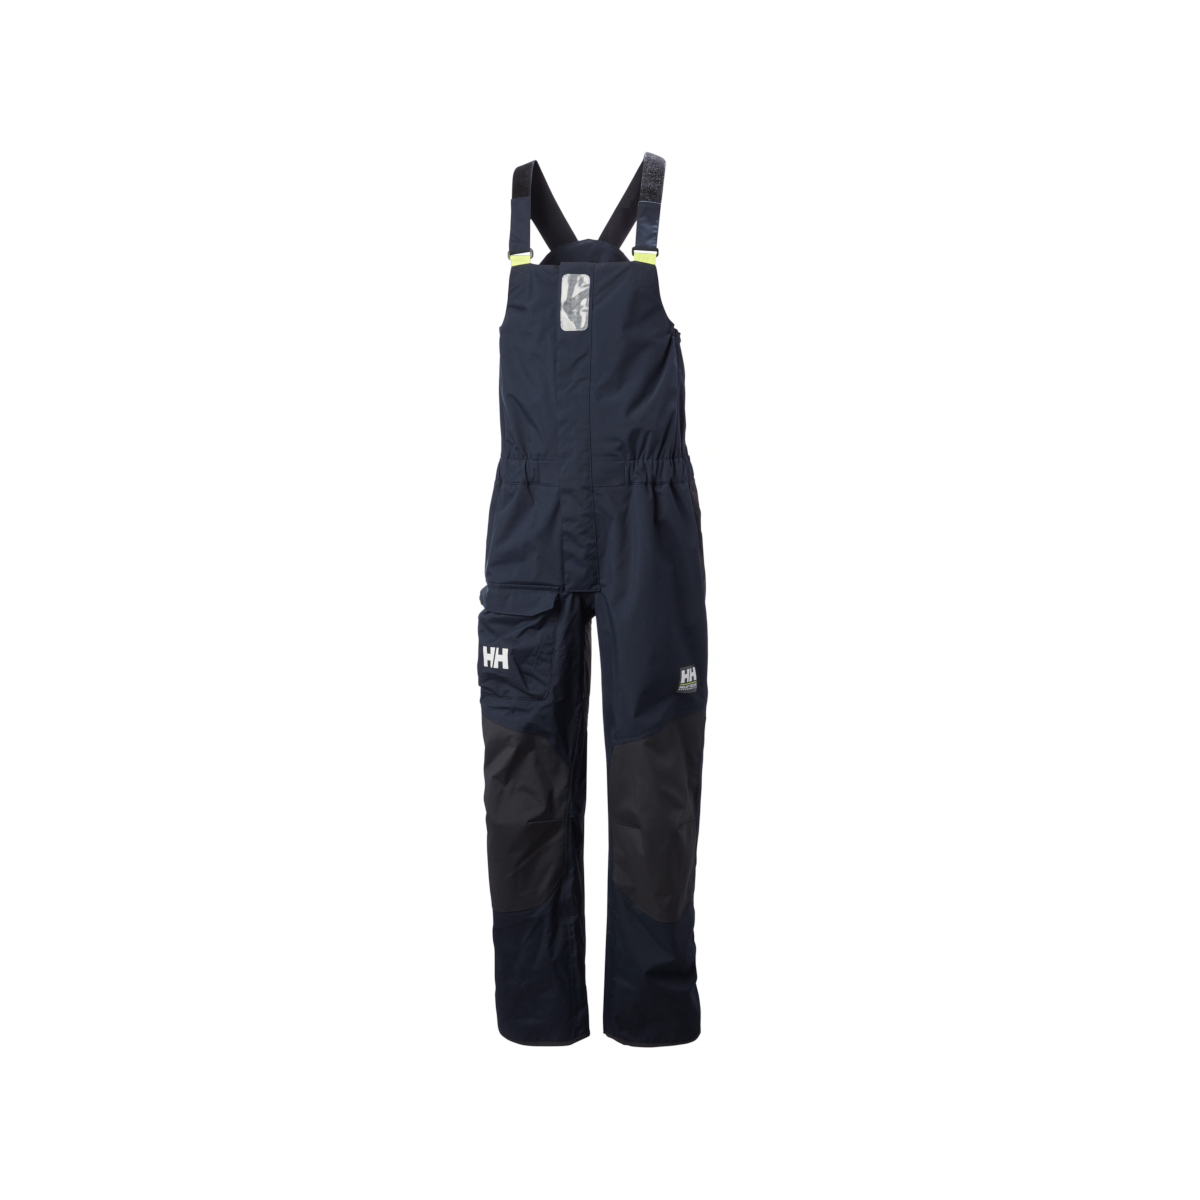 Helly Hansen Pier 3.0 pantalon de voile homme bleu marine, taille XXL